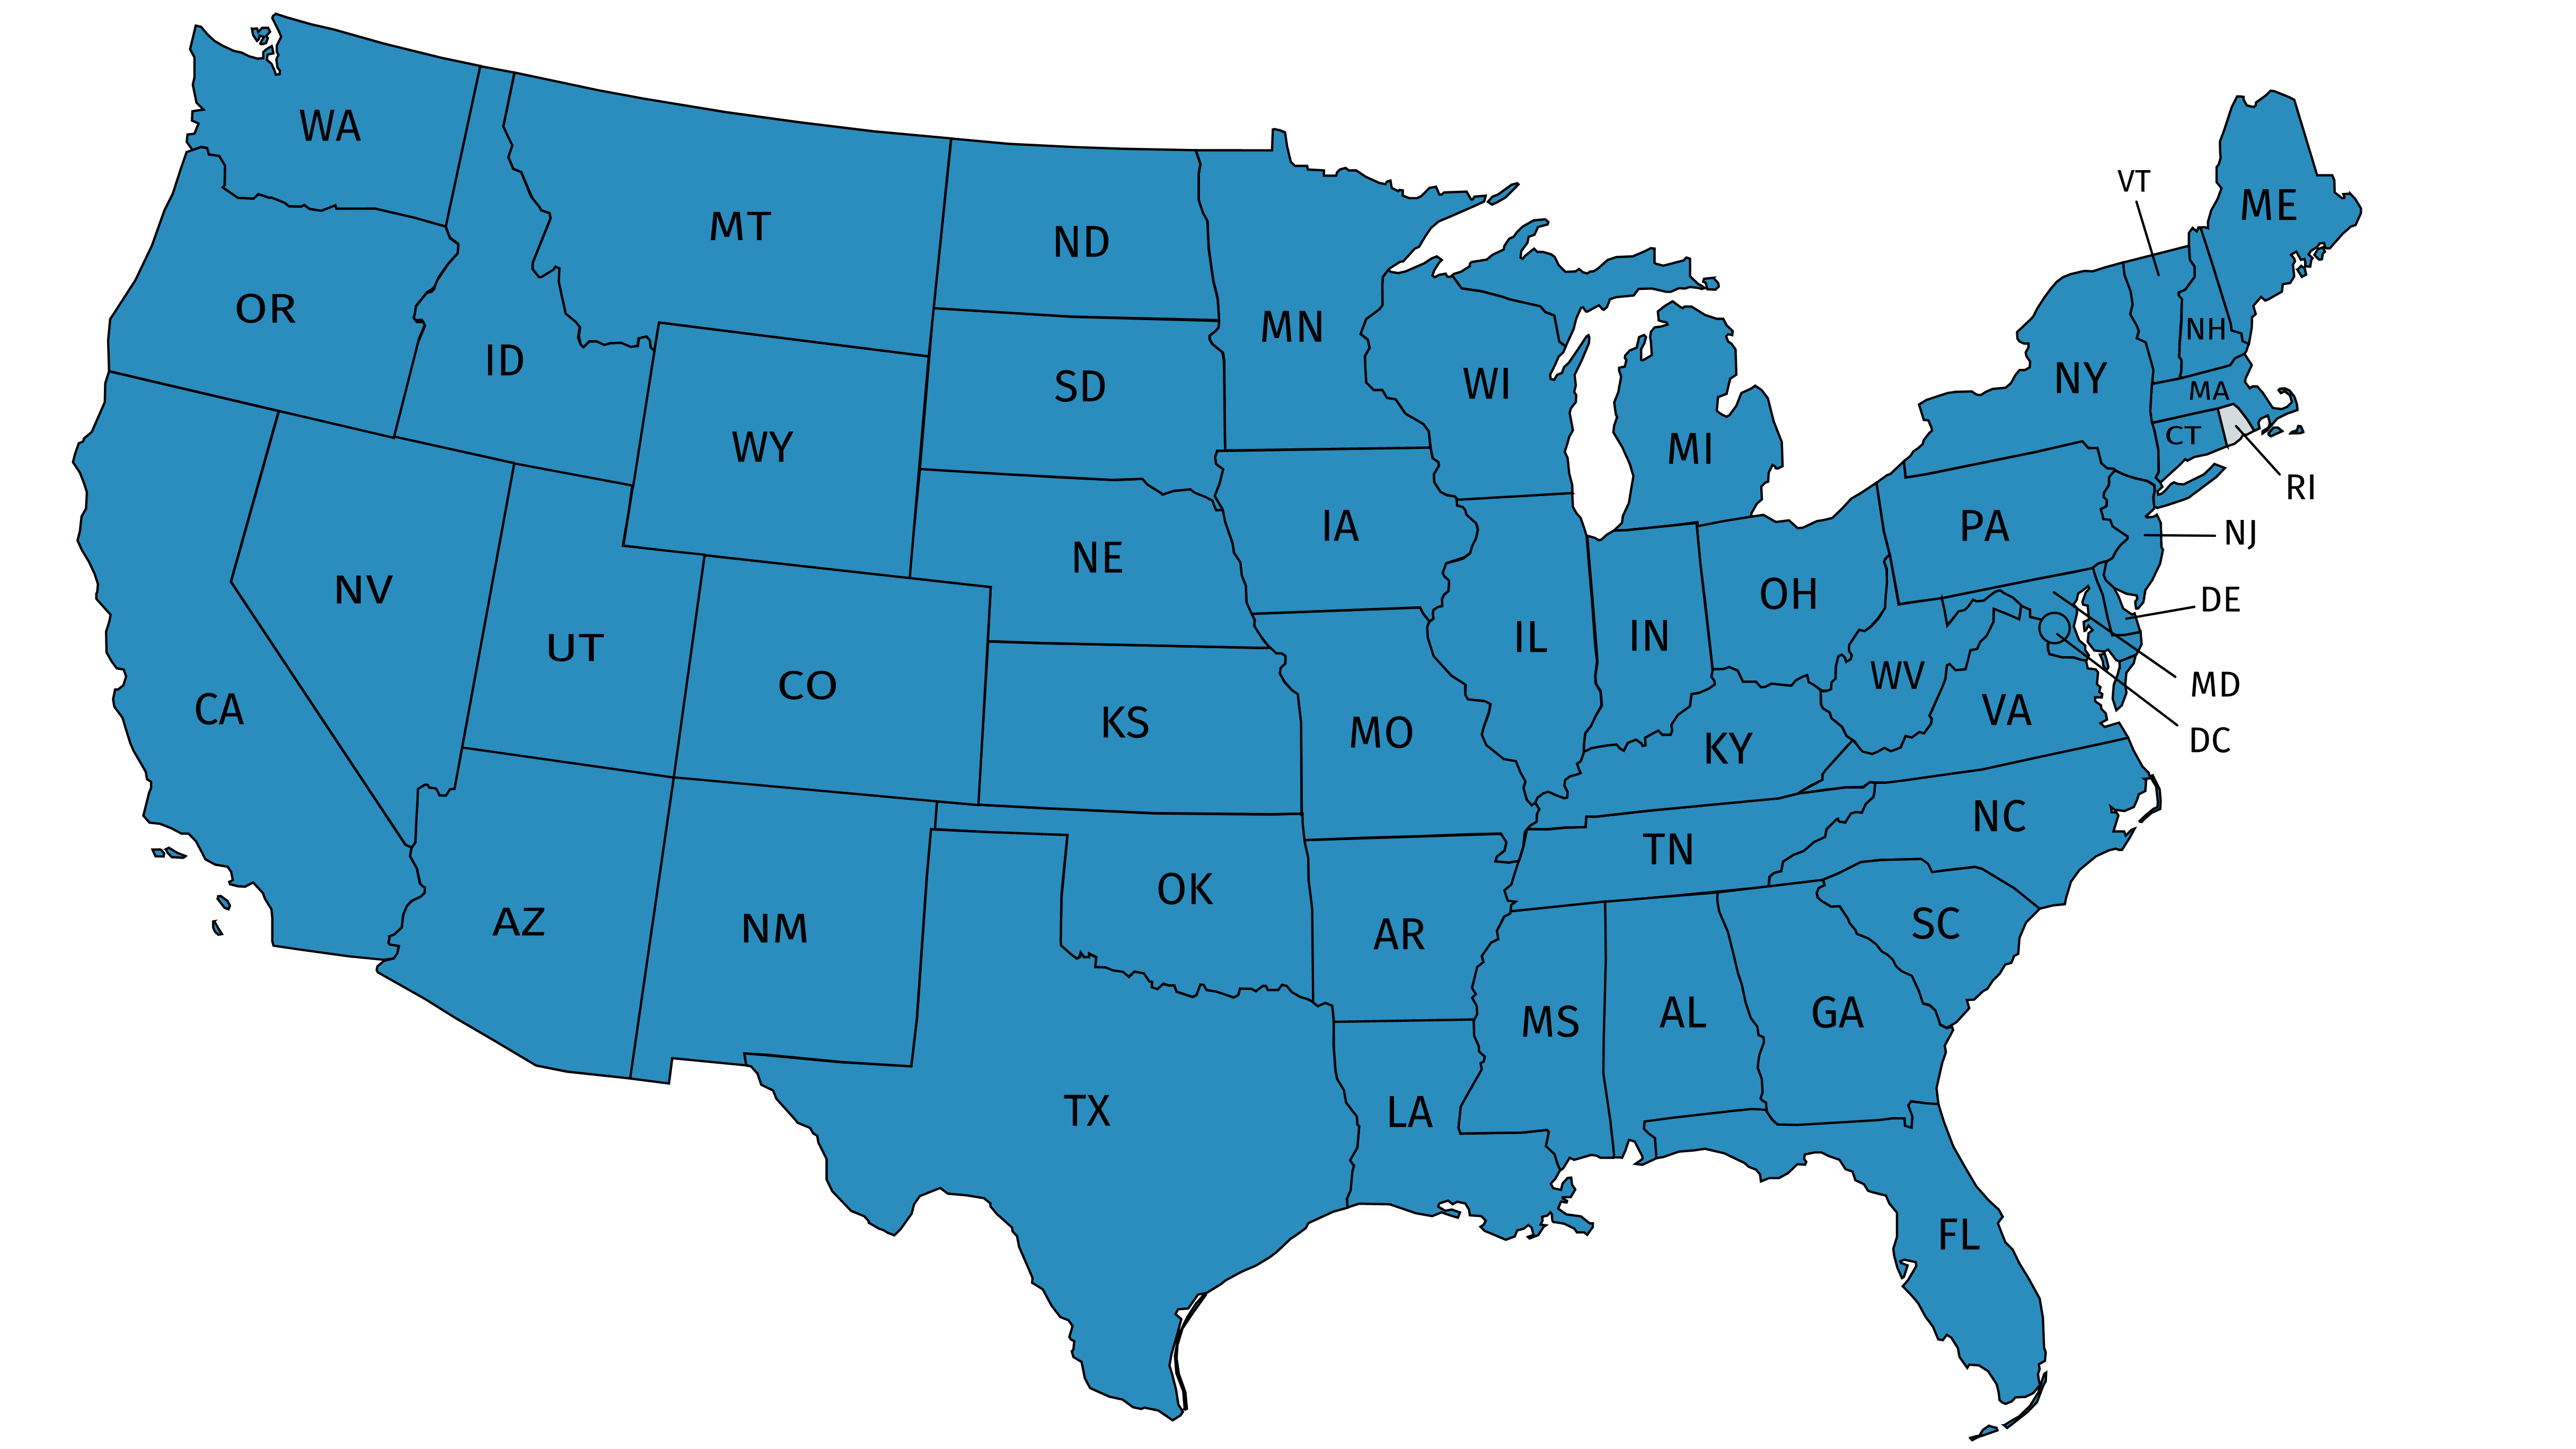 48 states excluding alaska and Hawaii